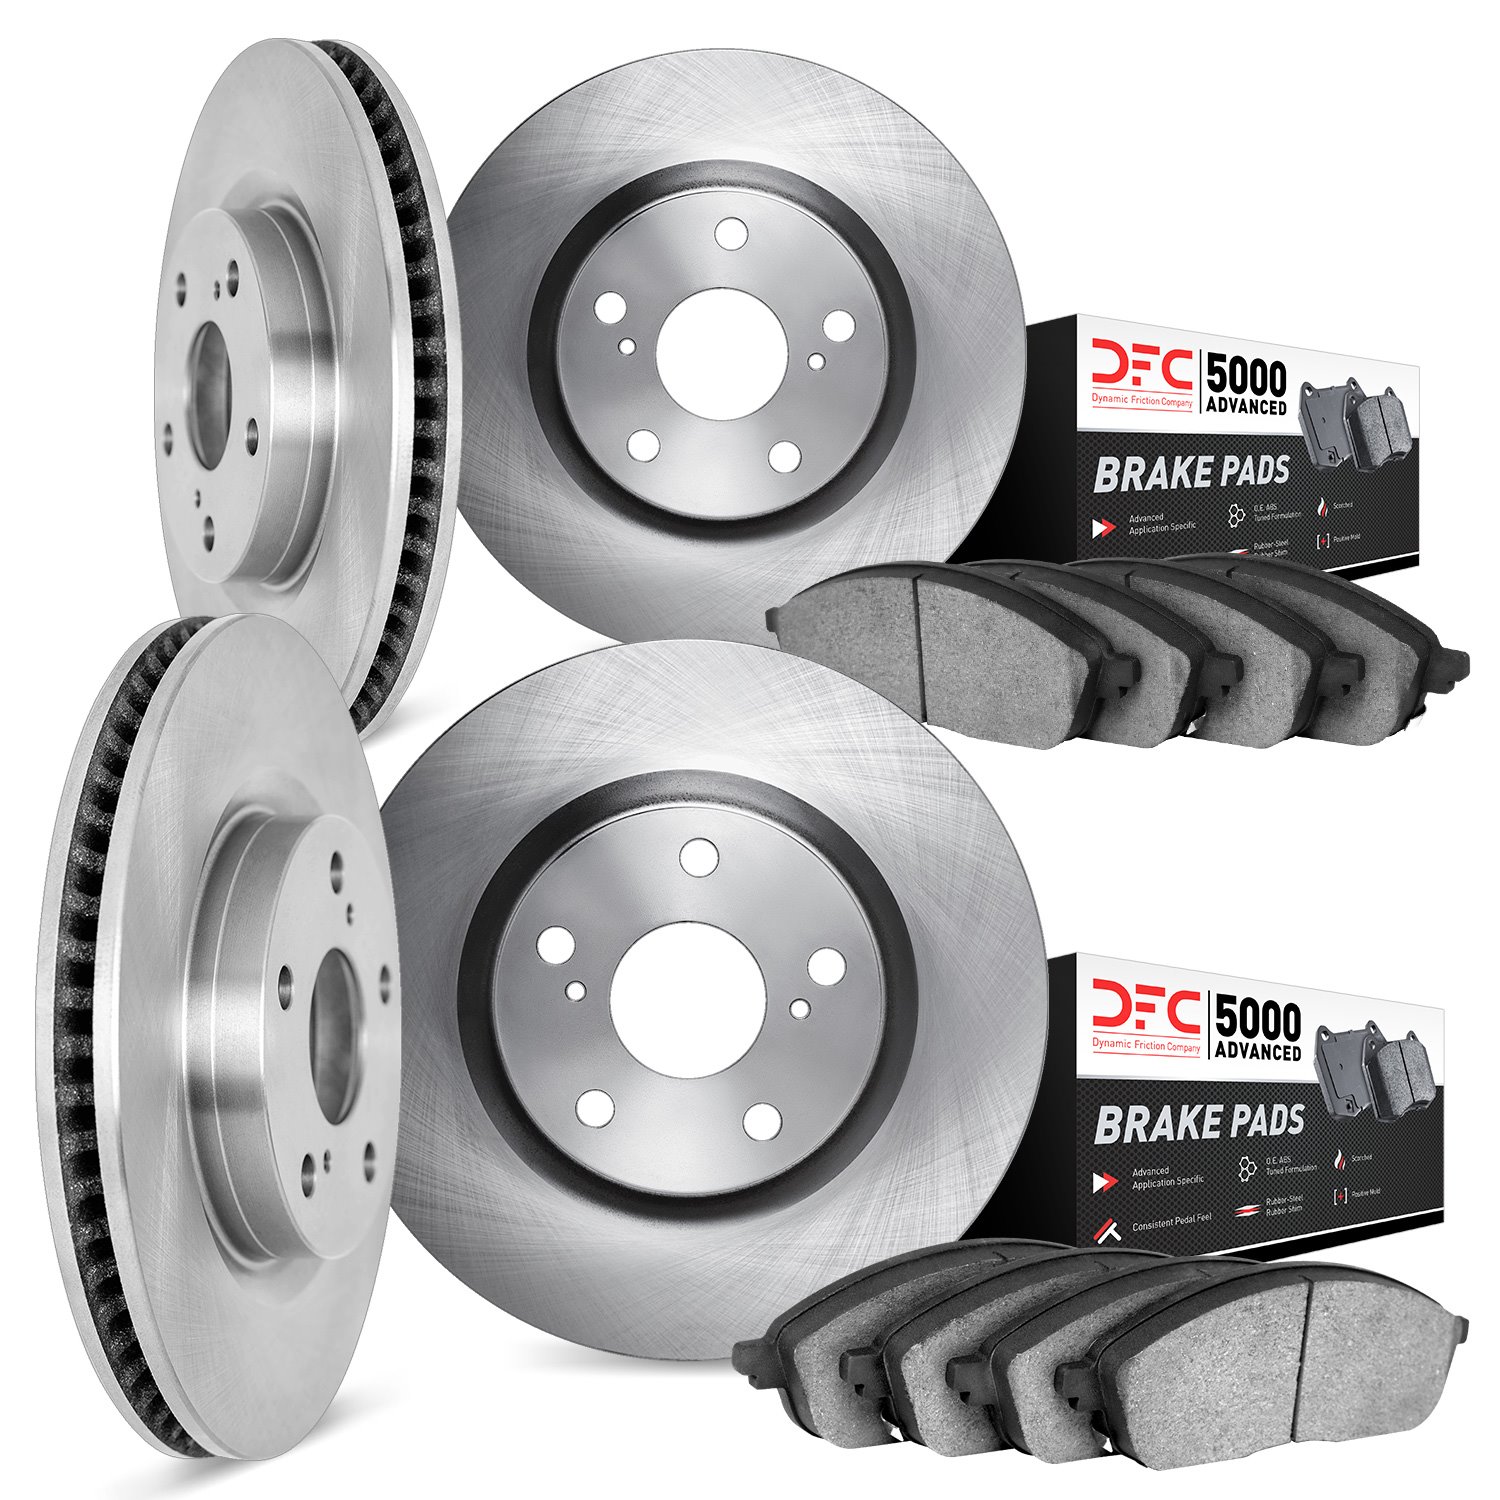 6504-42184 Brake Rotors w/5000 Advanced Brake Pads Kit, Fits Select Mopar, Position: Front and Rear